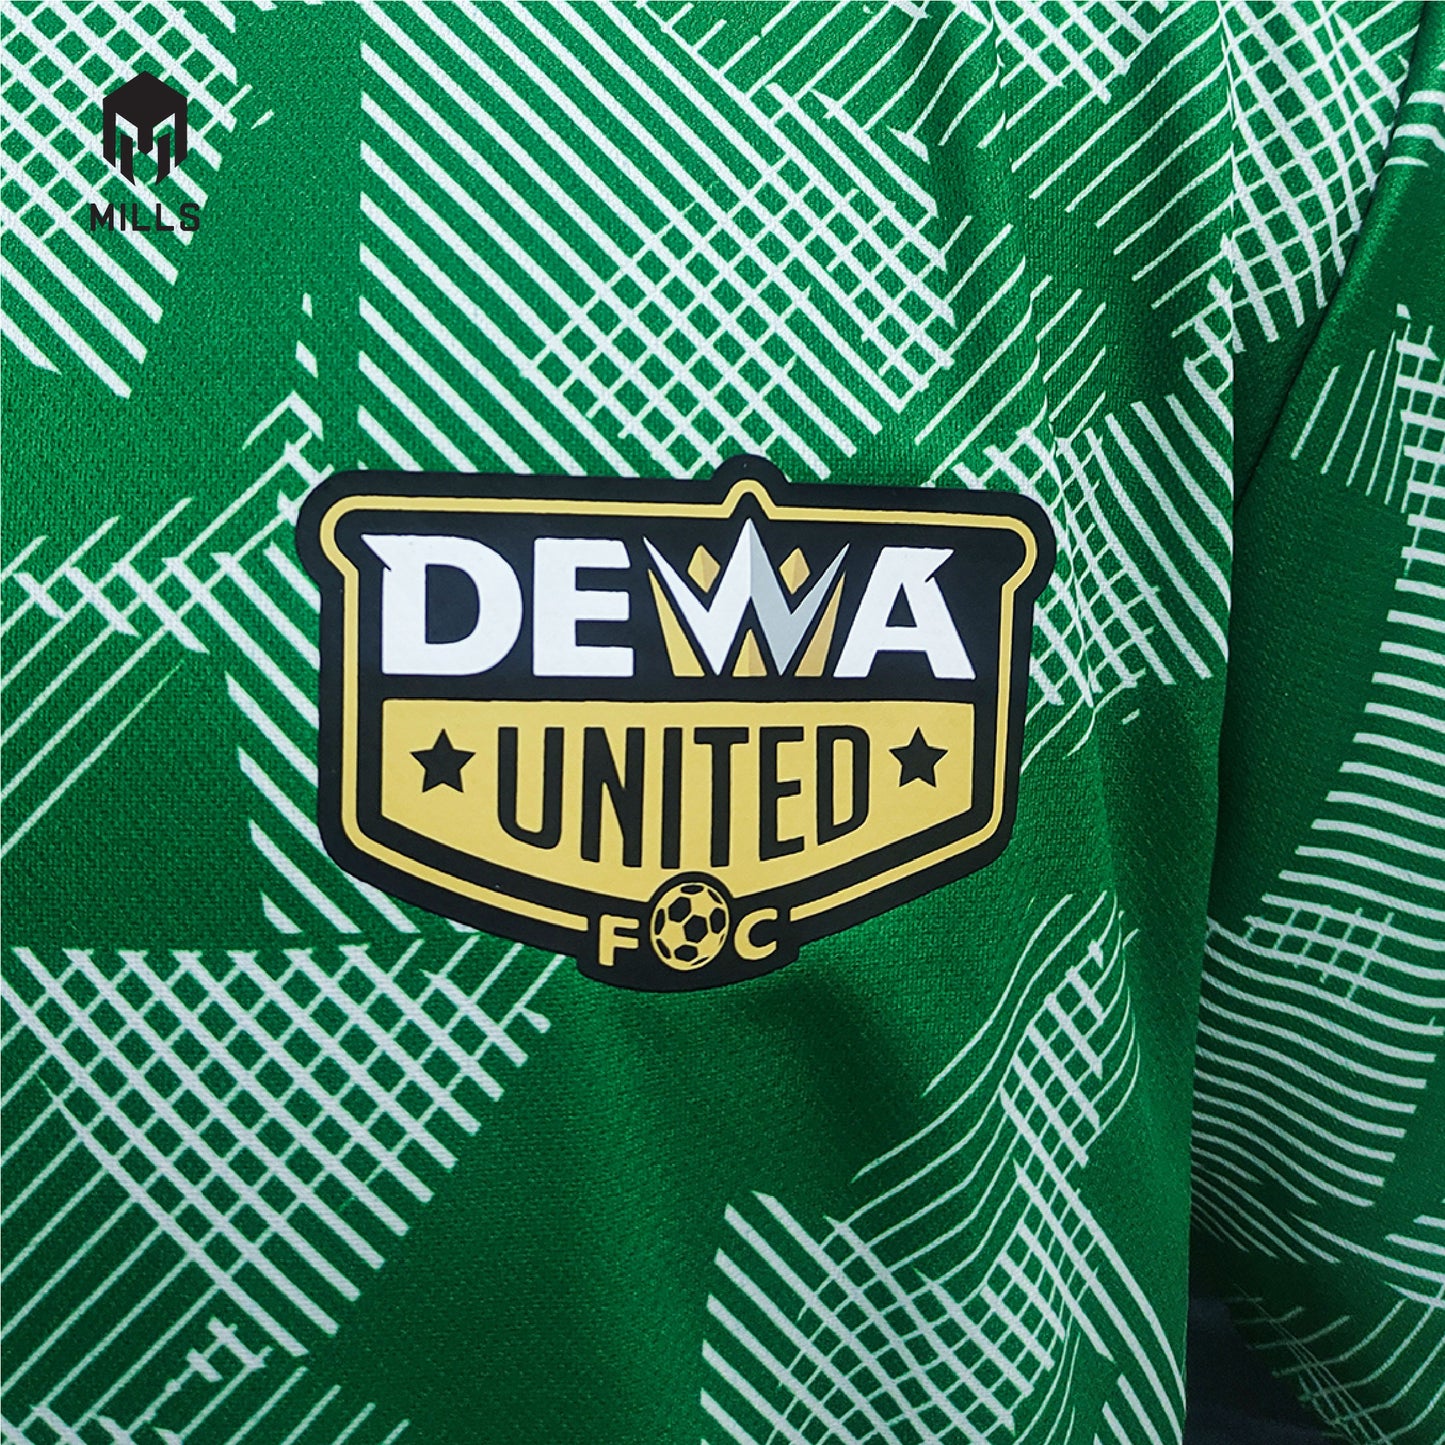 MILLS Dewa United FC Training Jersey 1162DUFC